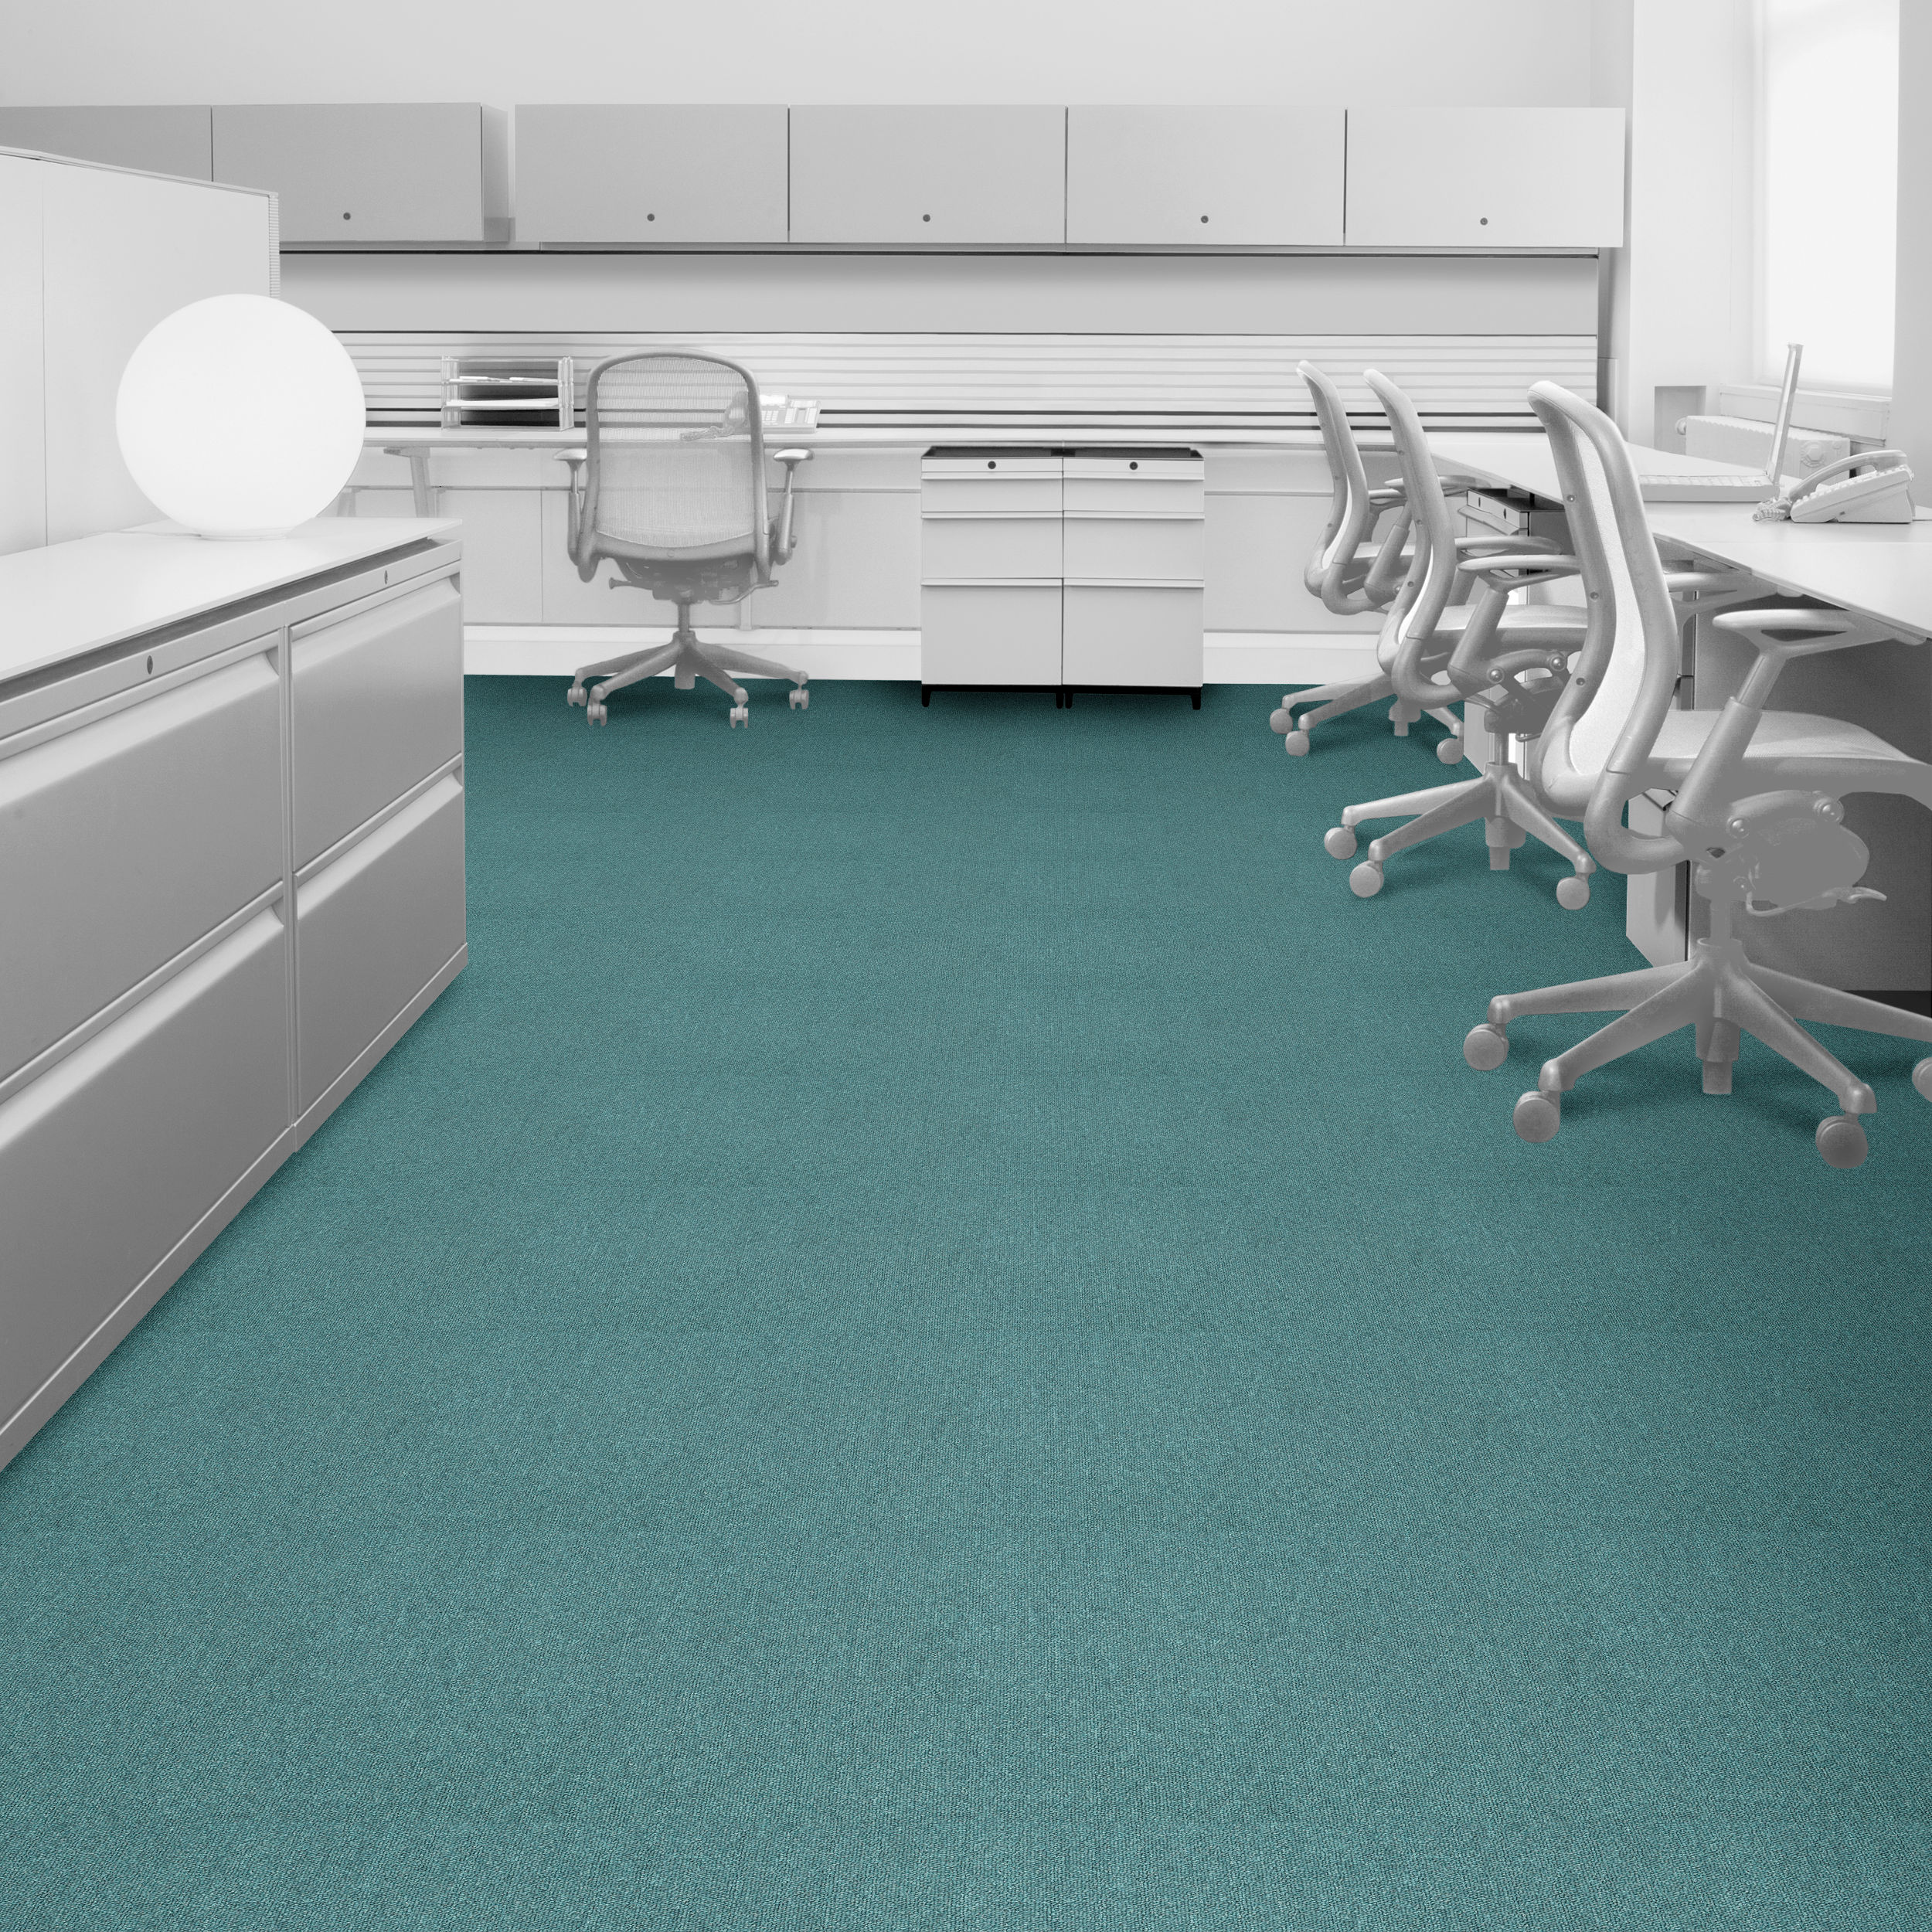 Interface Heuga 580 Carpet Tile - Lagoon variation in office setting.